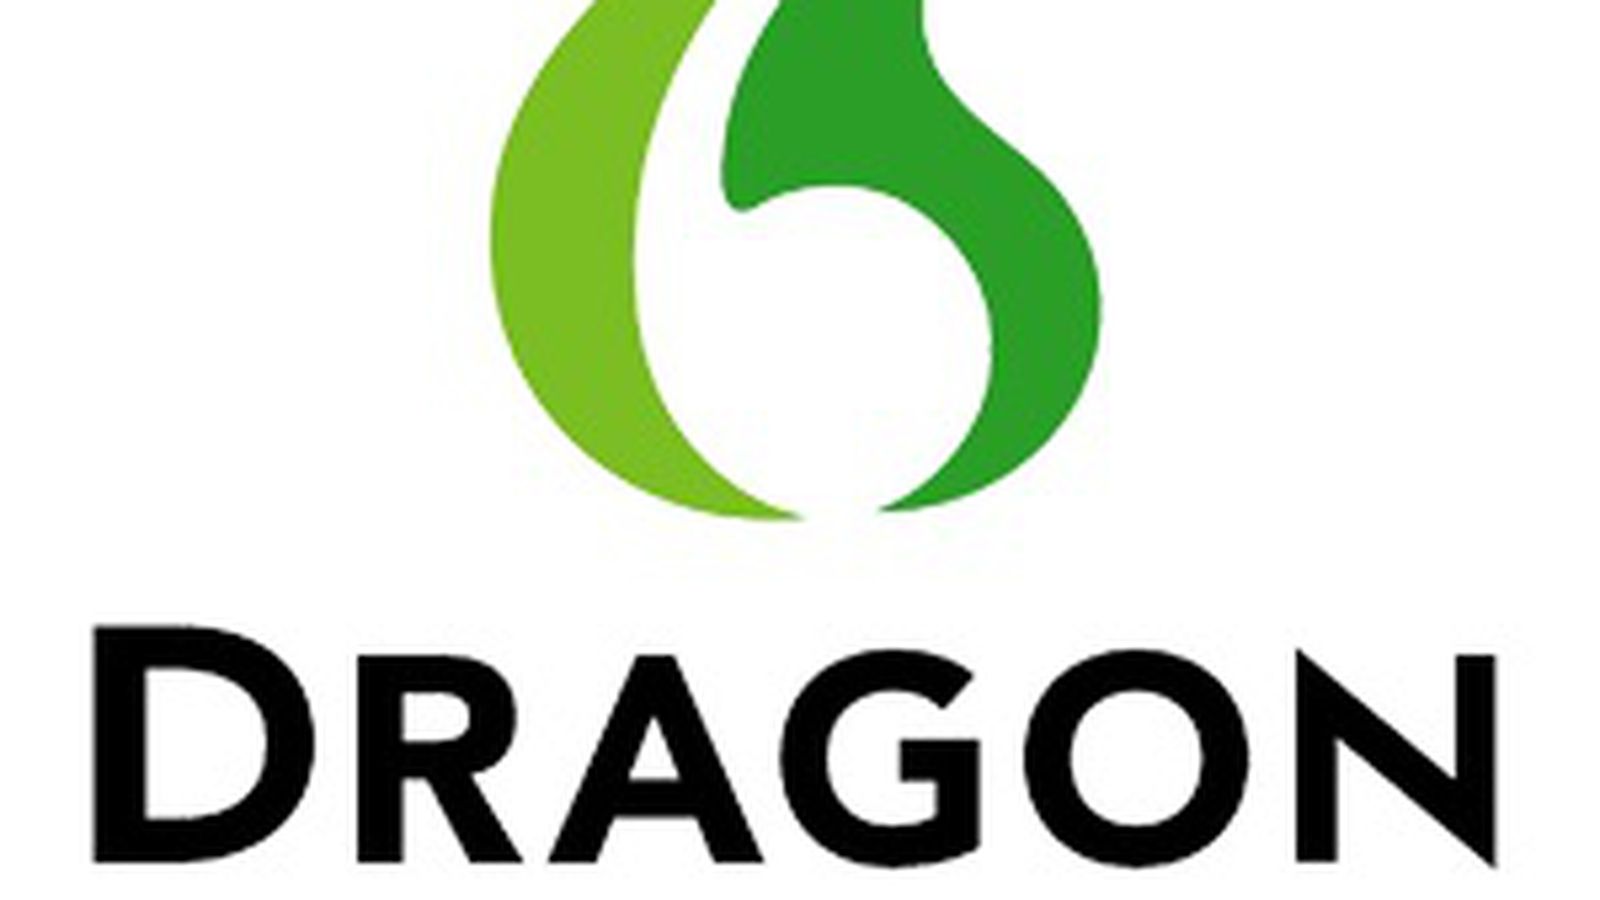 dragon professional individual for mac